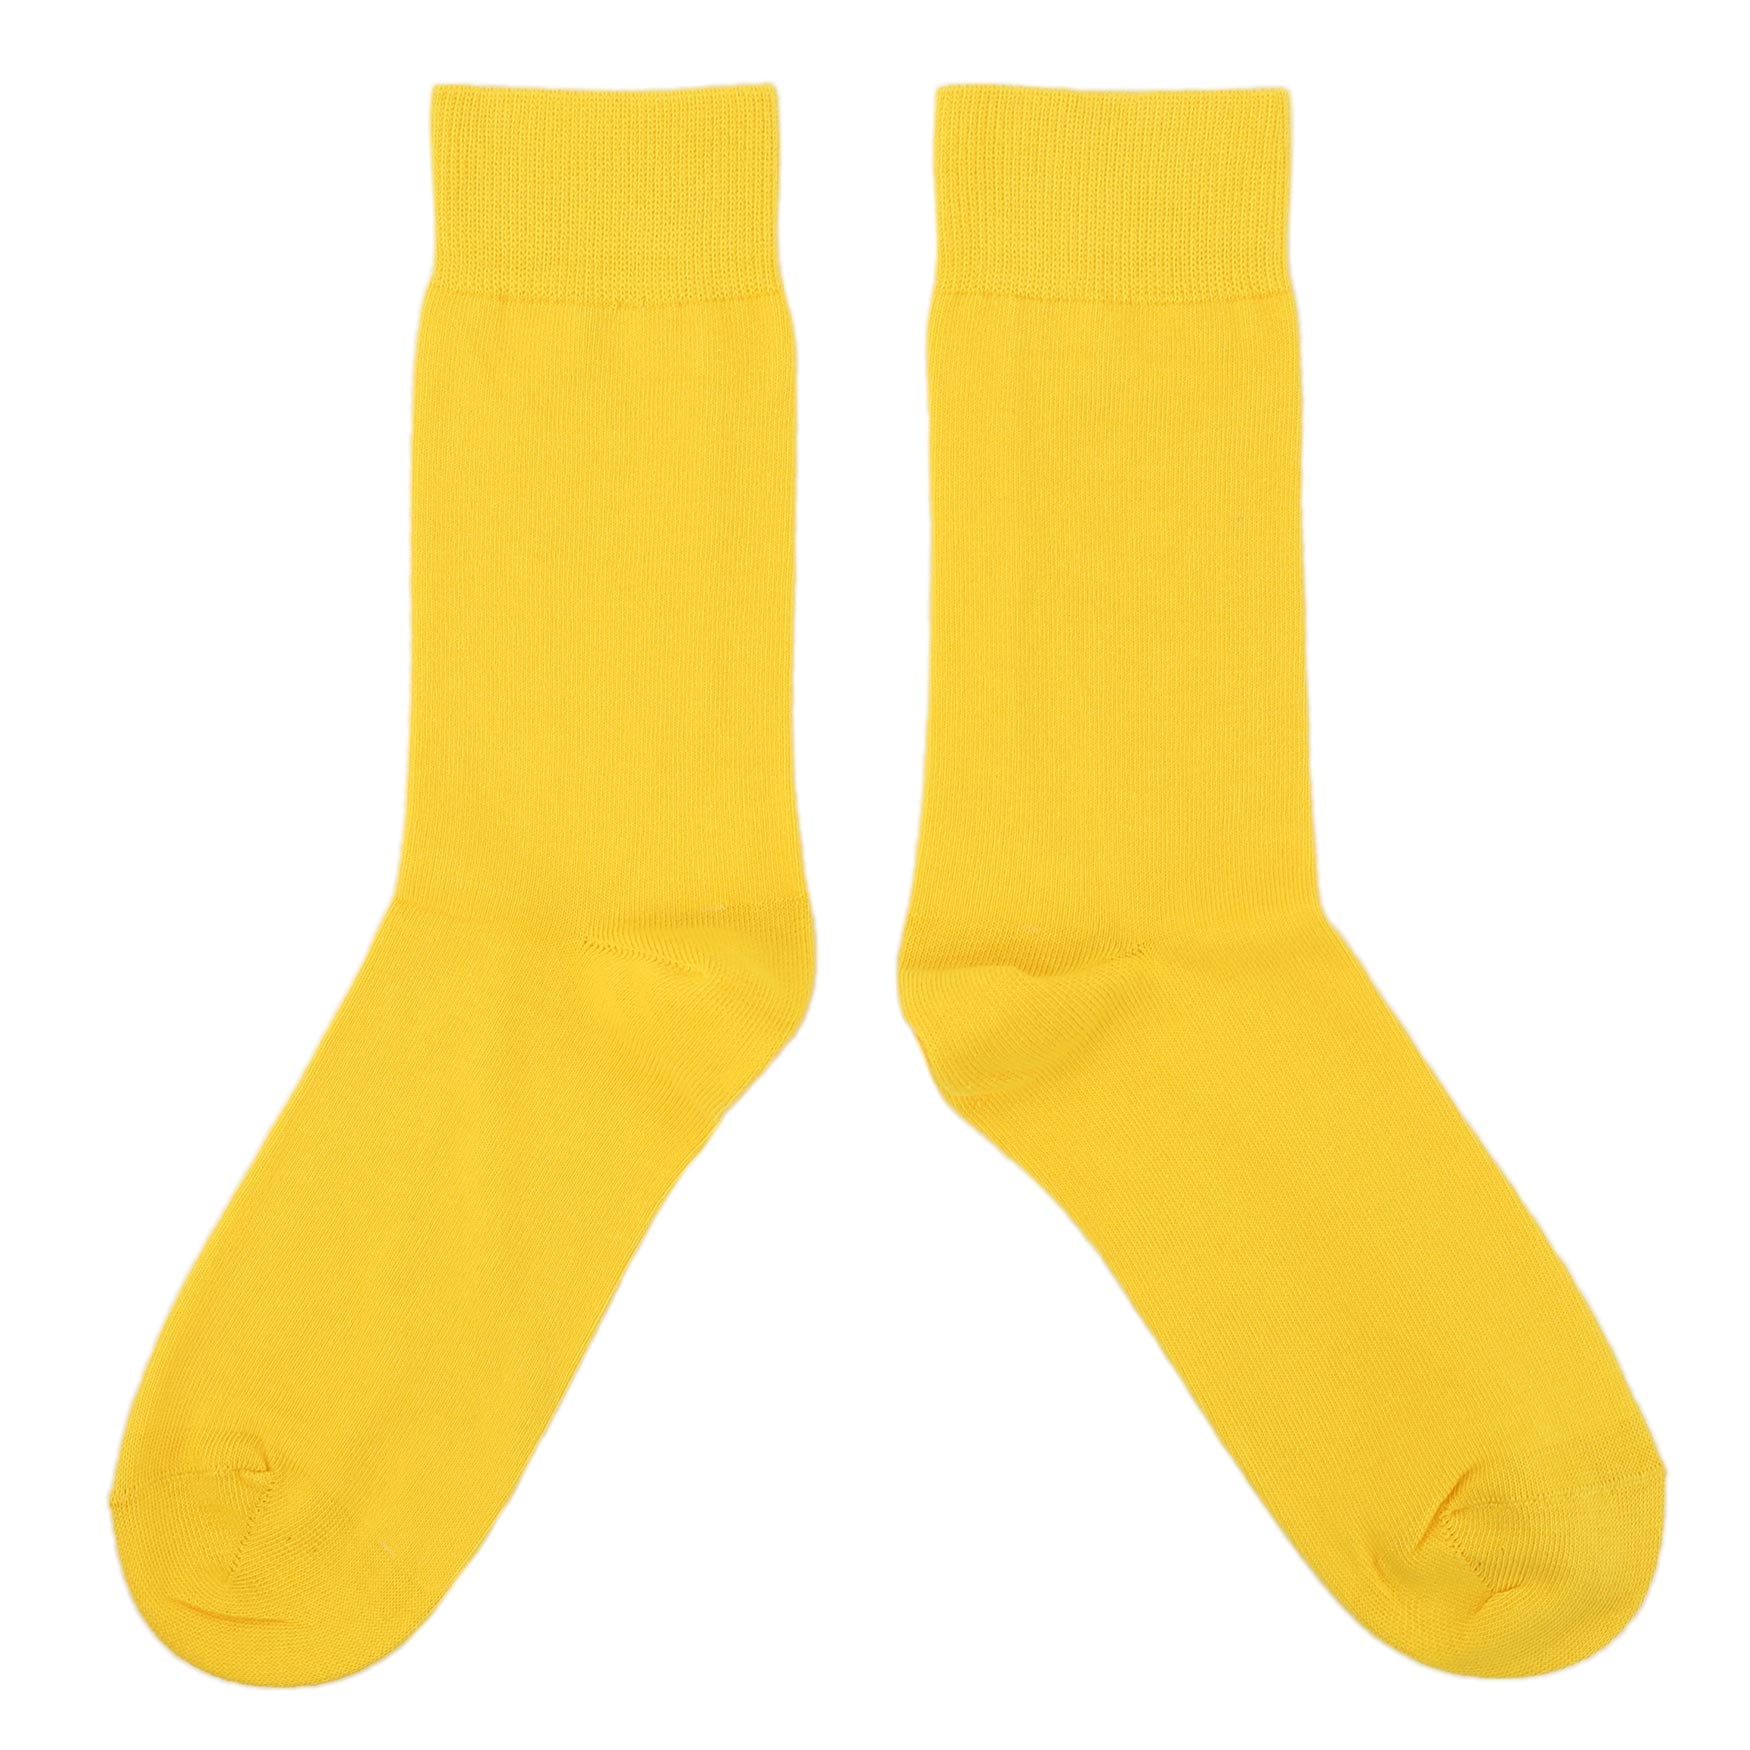 golden-yellow-solid-color-mens-dress-socks-boldsocks-overhead